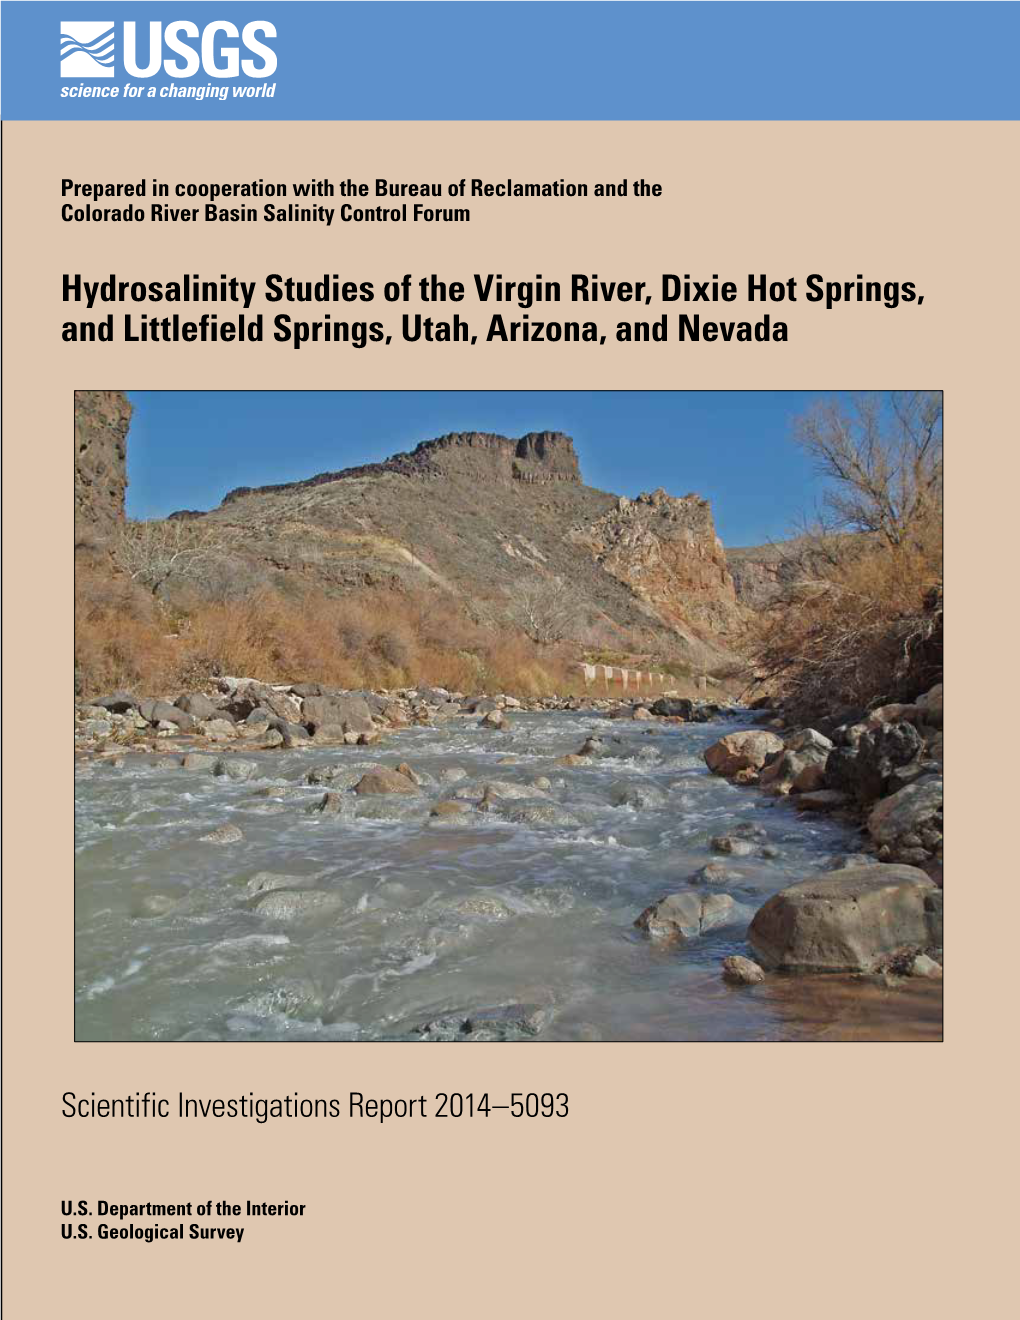 Hydrosalinity Studies of the Virgin River, Dixie Hot Springs, and Littlefield Springs, Utah, Arizona, and Nevada